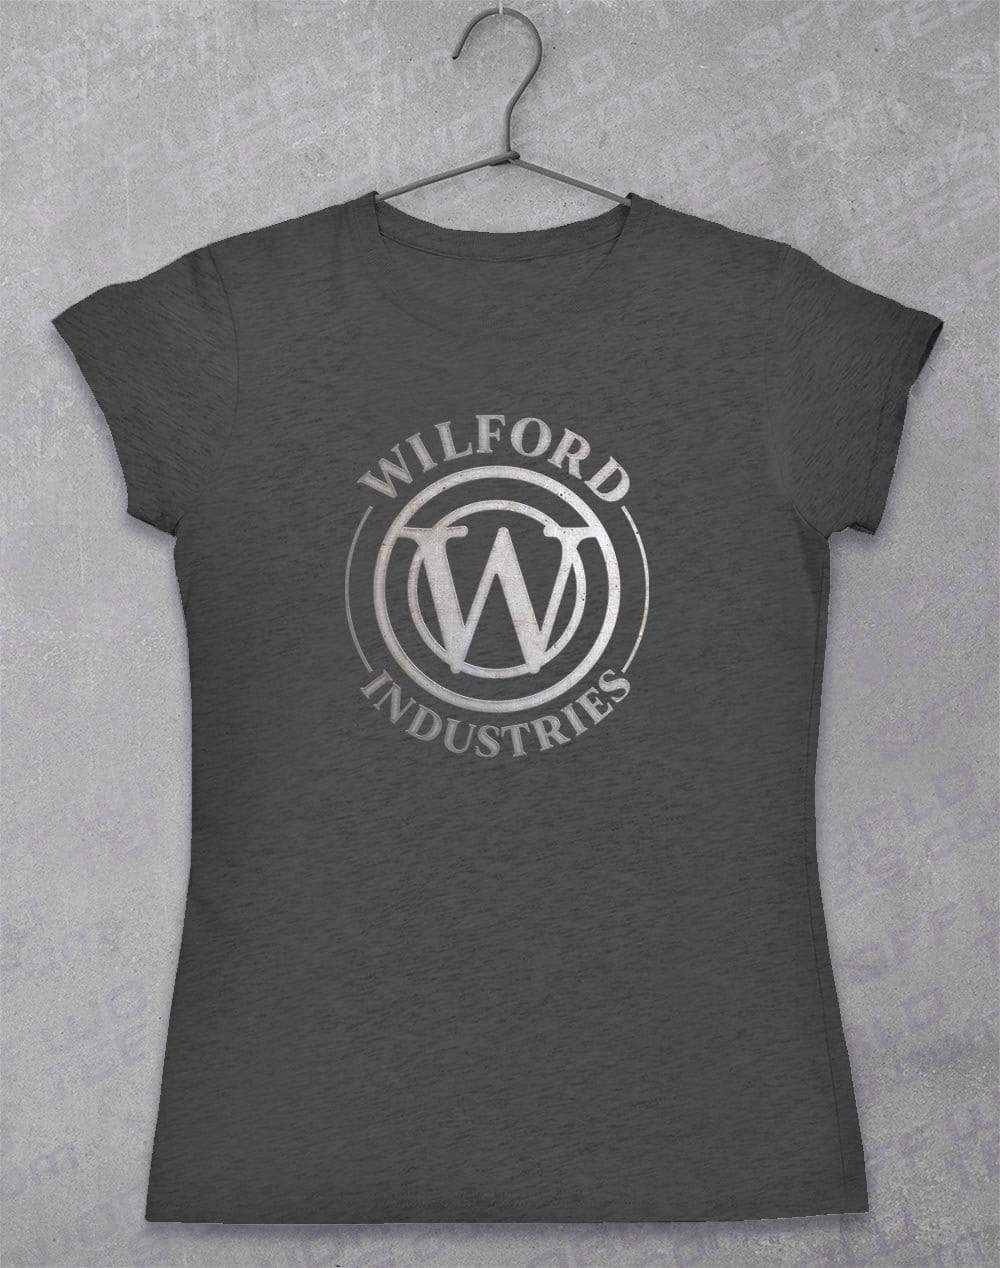 Wilford Industries Women's T-Shirt 8-10 / Dark Heather  - Off World Tees